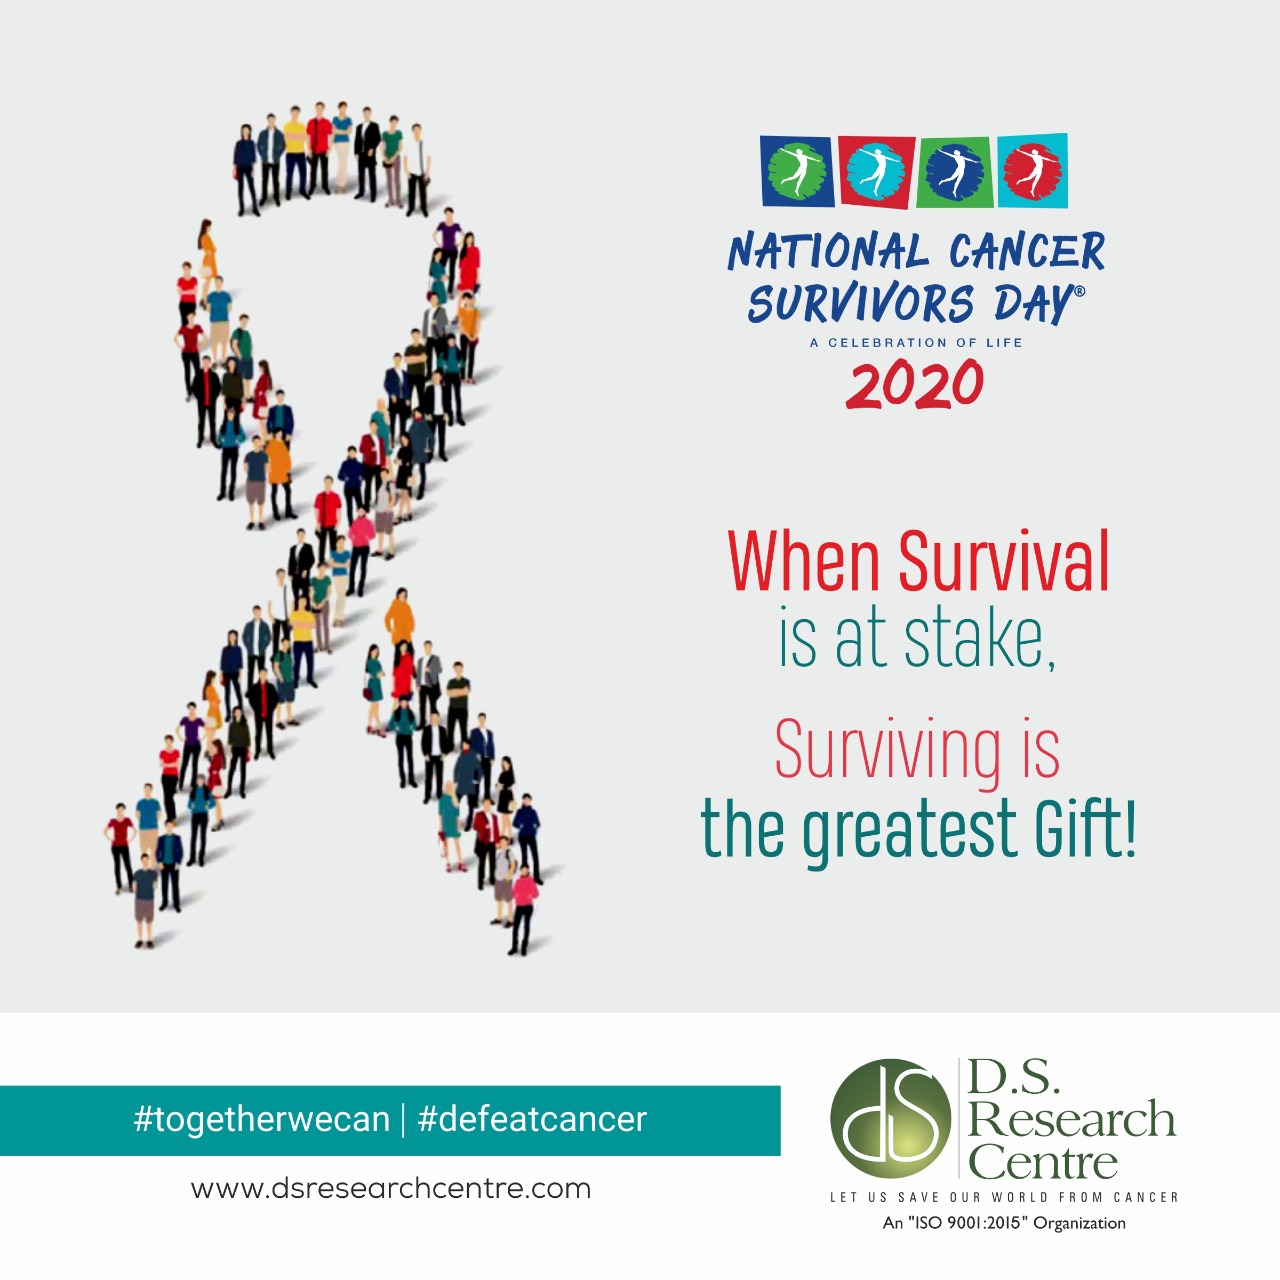 National Cancer Survivors Day 